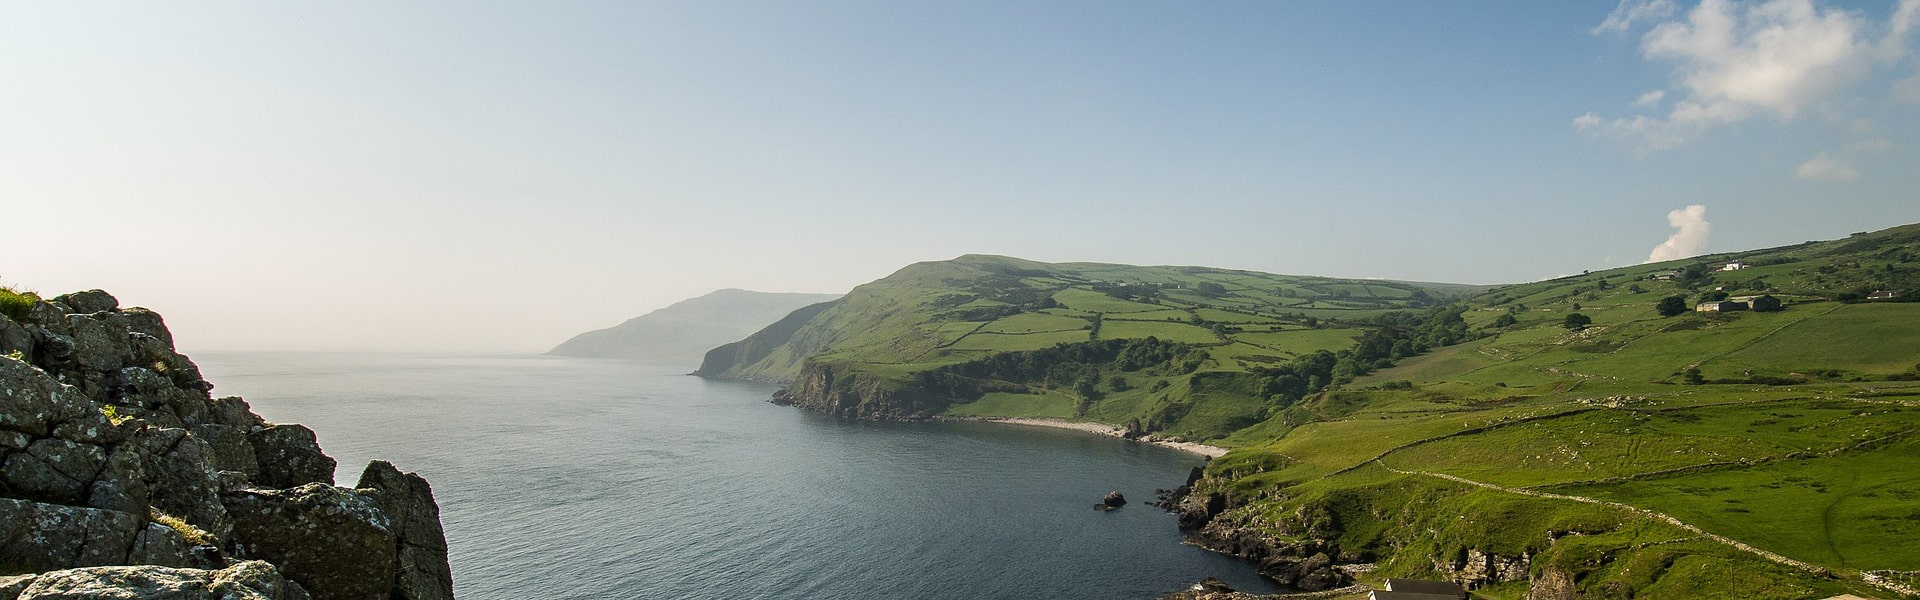 Northern Ireland coastline